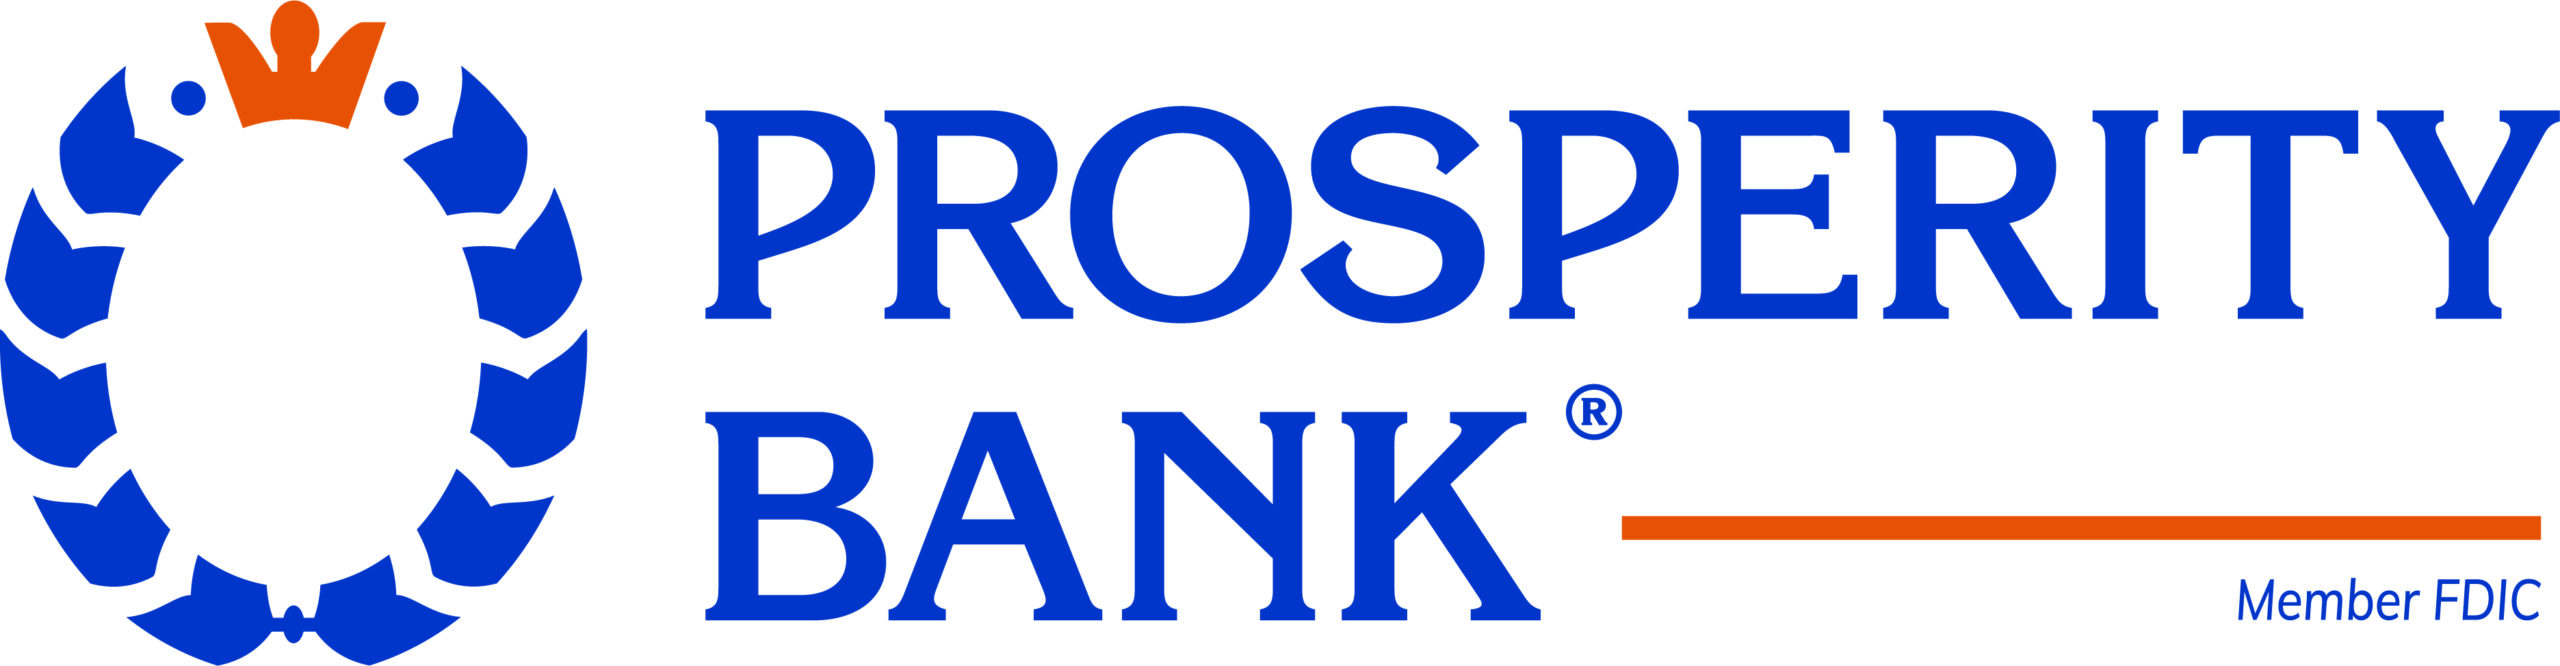 Prosperty-Bank-Stacked-Logo-Vector-3-scaled.jpg